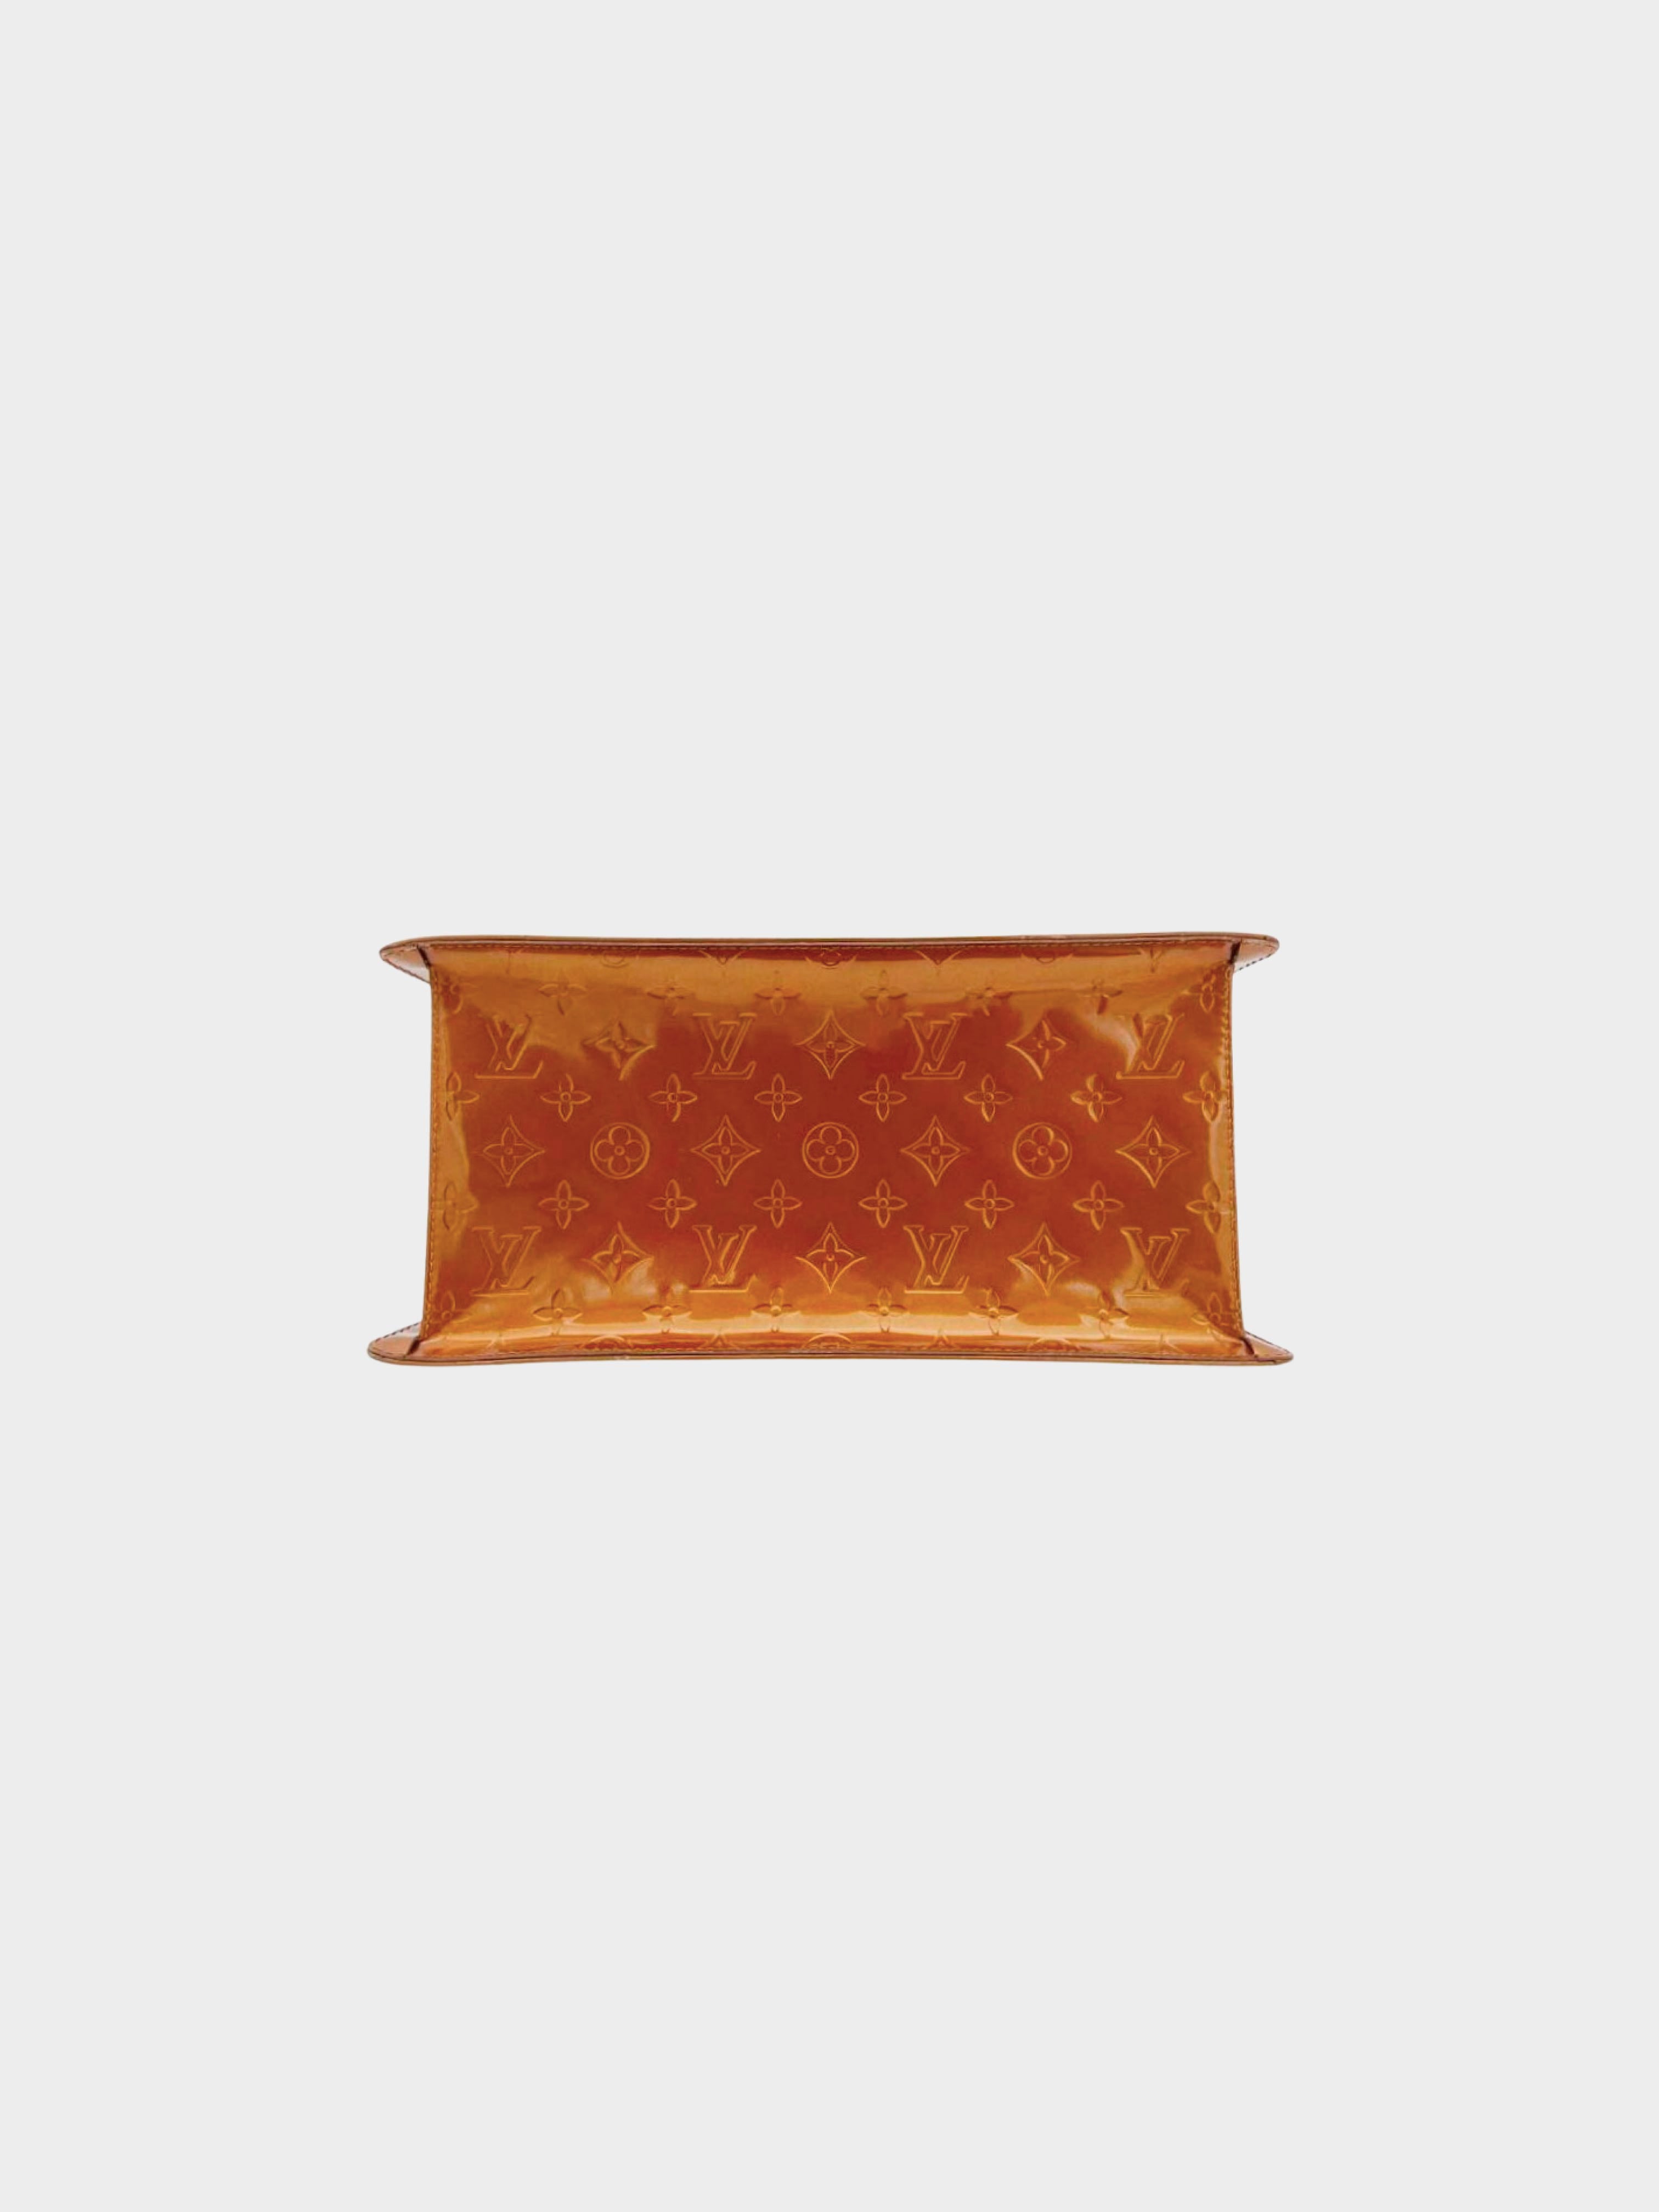 Louis Vuitton Bronze Monogram Vernis Leather Forsyth GM Bag. Very